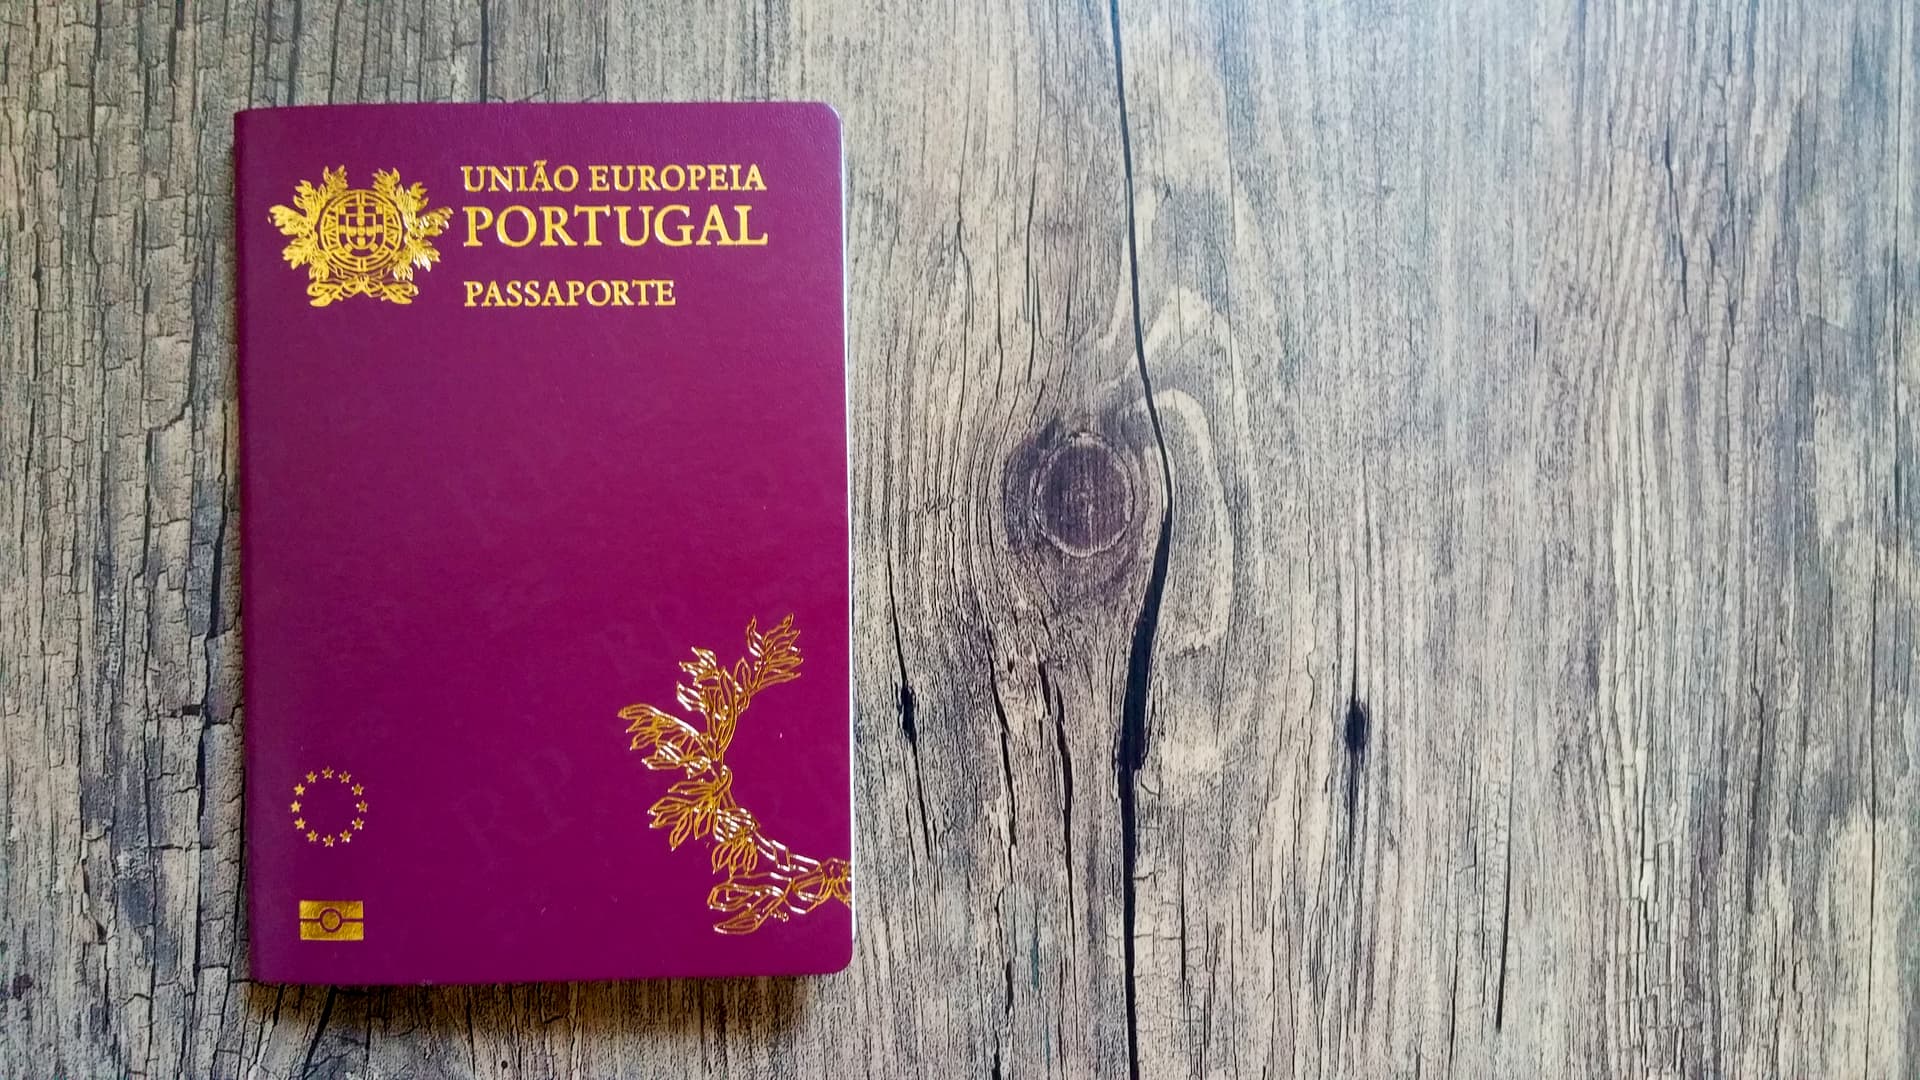 Portugal Golden Visa, Passport image